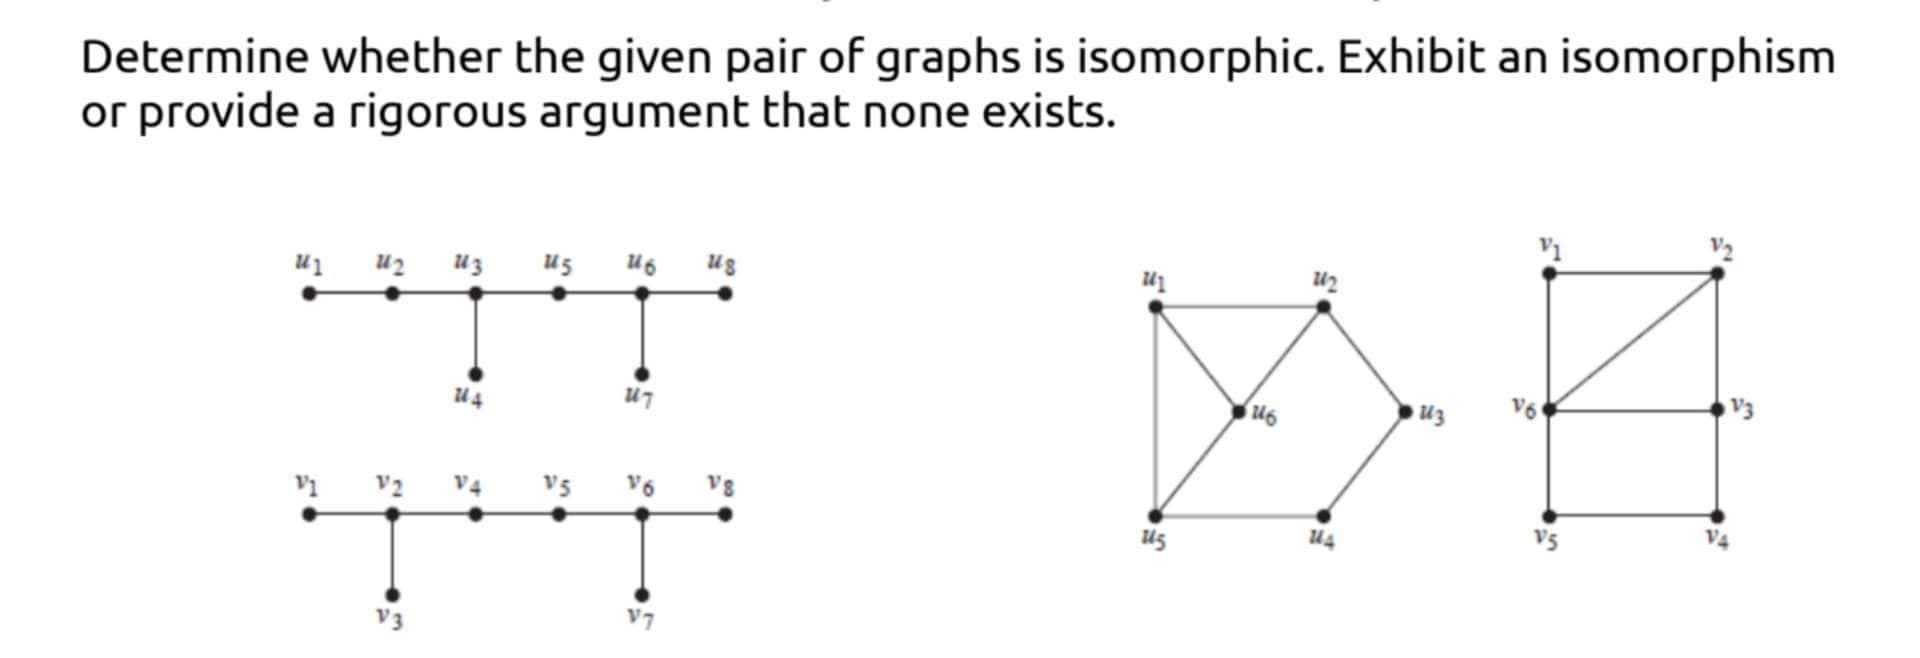 Determine whether the given pair of graphs is isomorphic. Exhibit an isomorphism
or provide a rigorous argument that none exists.
uz Uz
us
Uz
v2
V4
V5
V5
V3
רV
